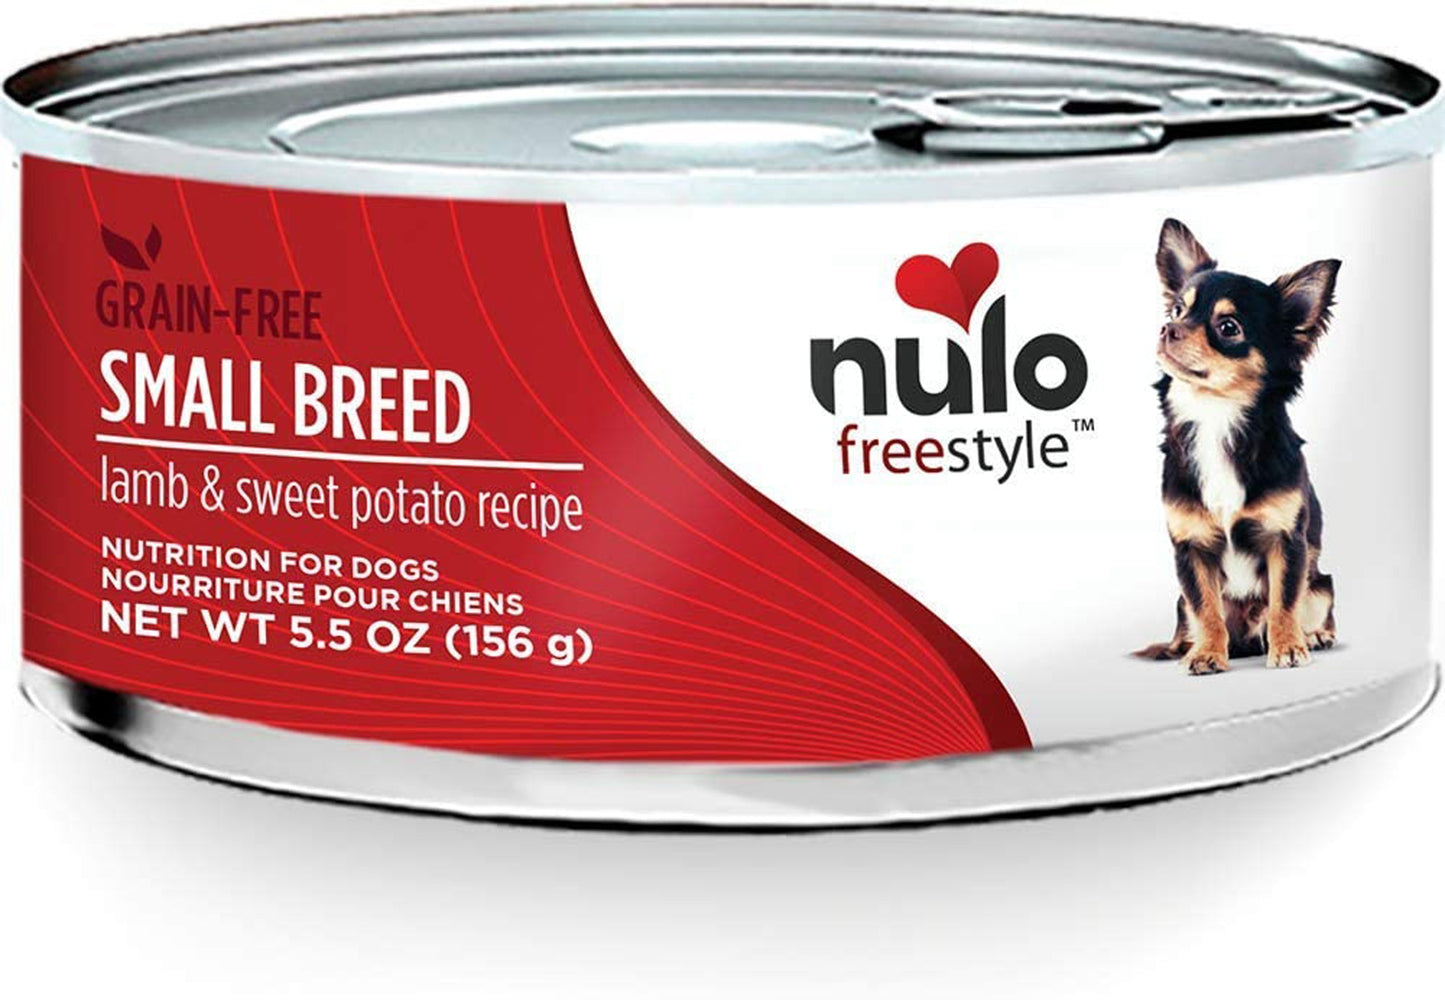 Nulo Freestyle Grain-Free Small Breed Wet Dog Food Lamb & Sweet Potato 5.5oz. (Case of 24)